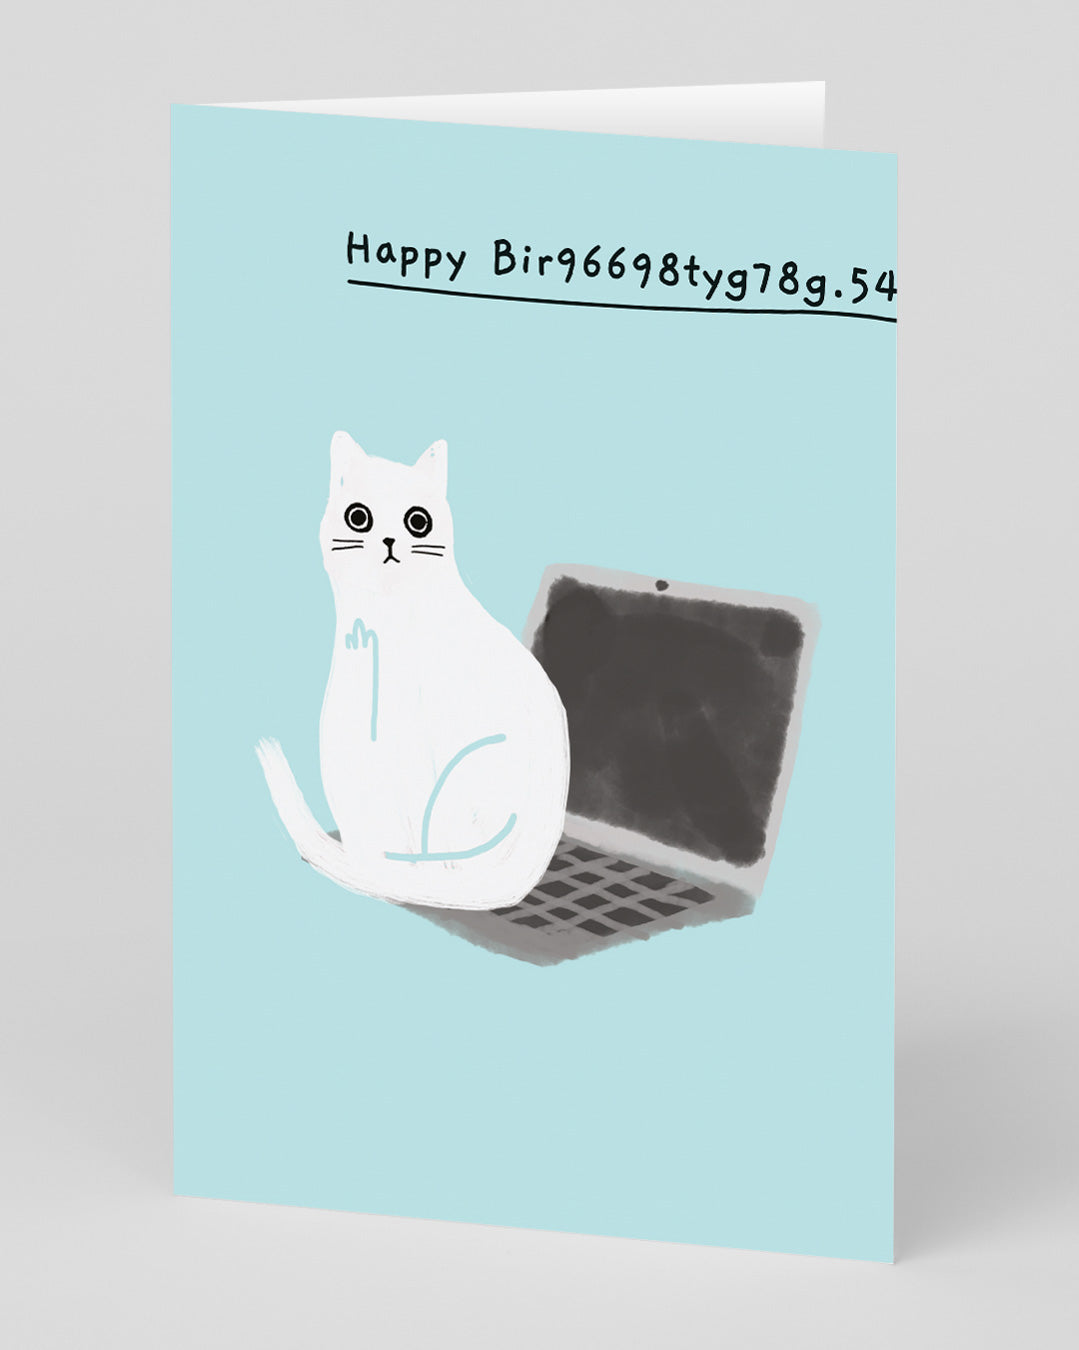 Personalised Happy Bir9669.. Laptop Birthday Card